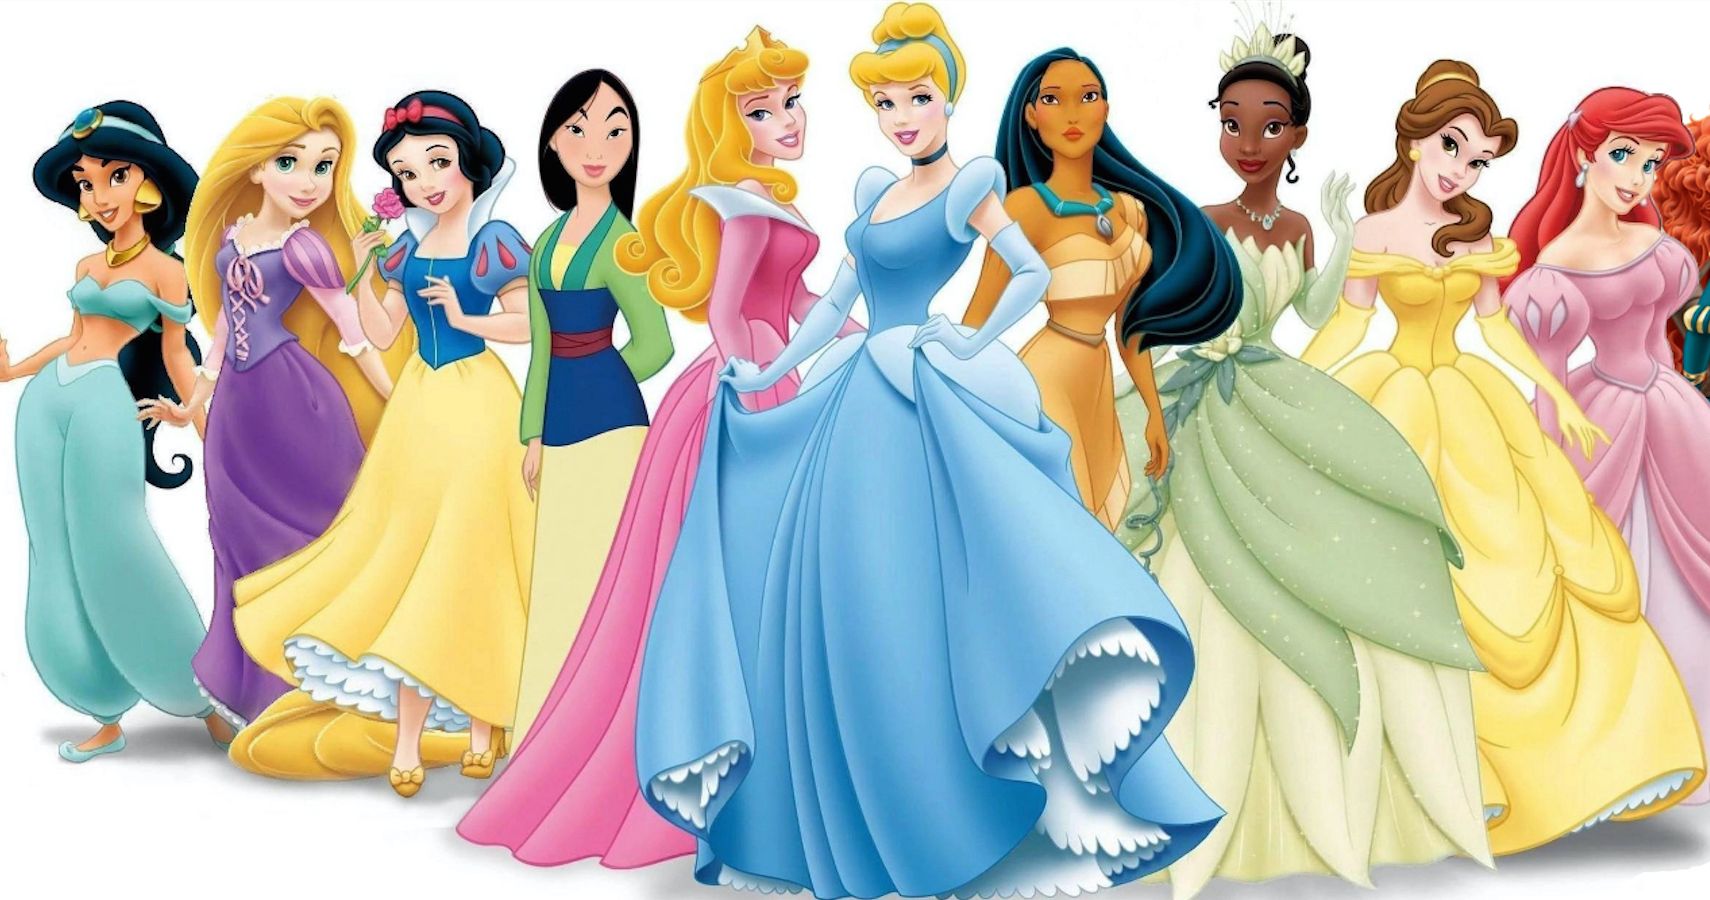 10 Disney Princesses Reimagined As Superheroes